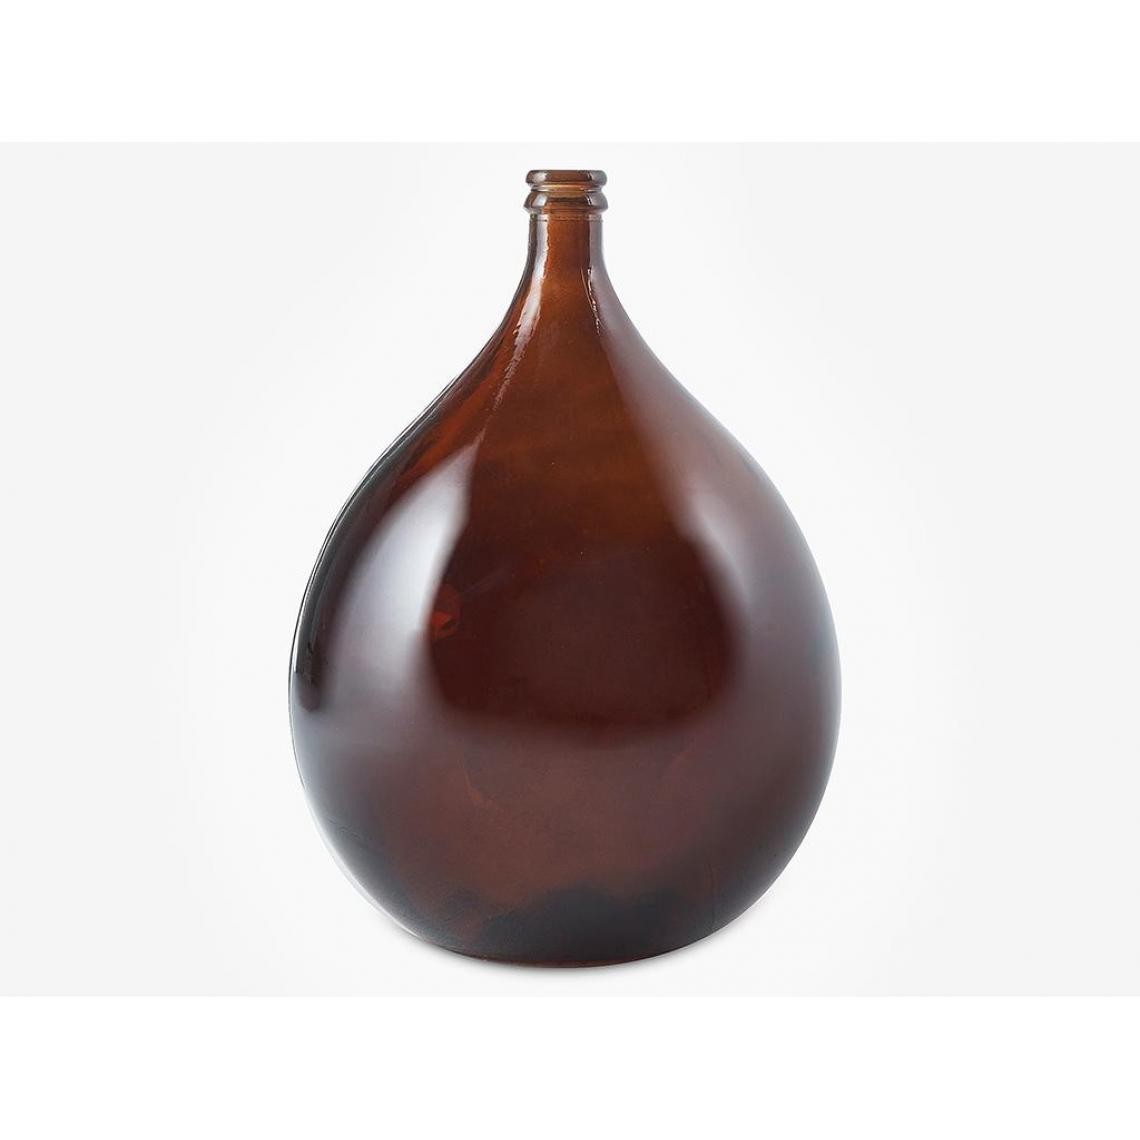 Vente-Unique - Vase SILICE - Vases